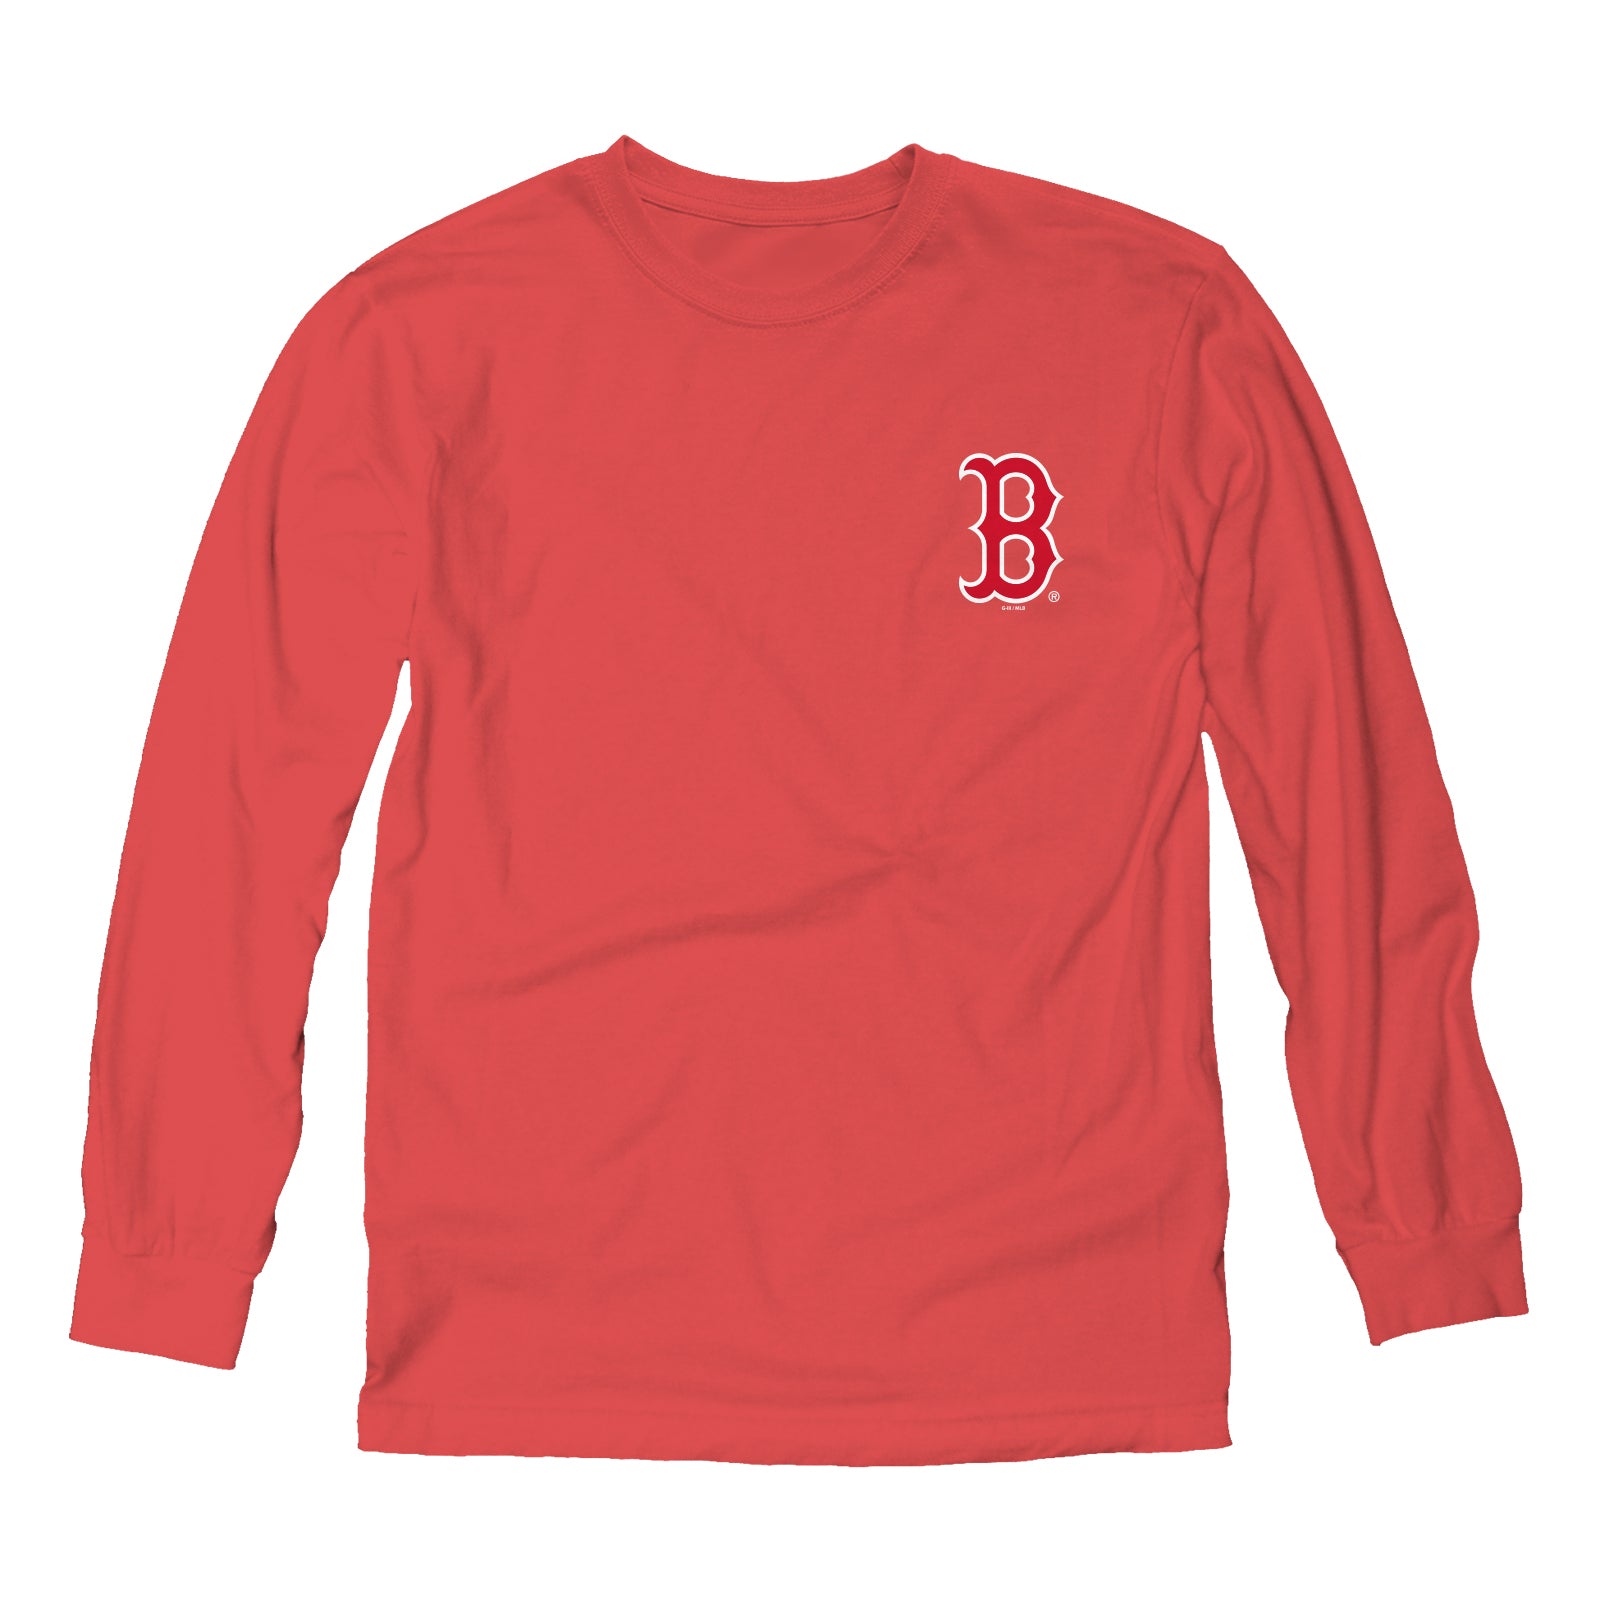 Mens Boston Red Sox Long Sleeve T-Shirts, Red Sox Long-Sleeved